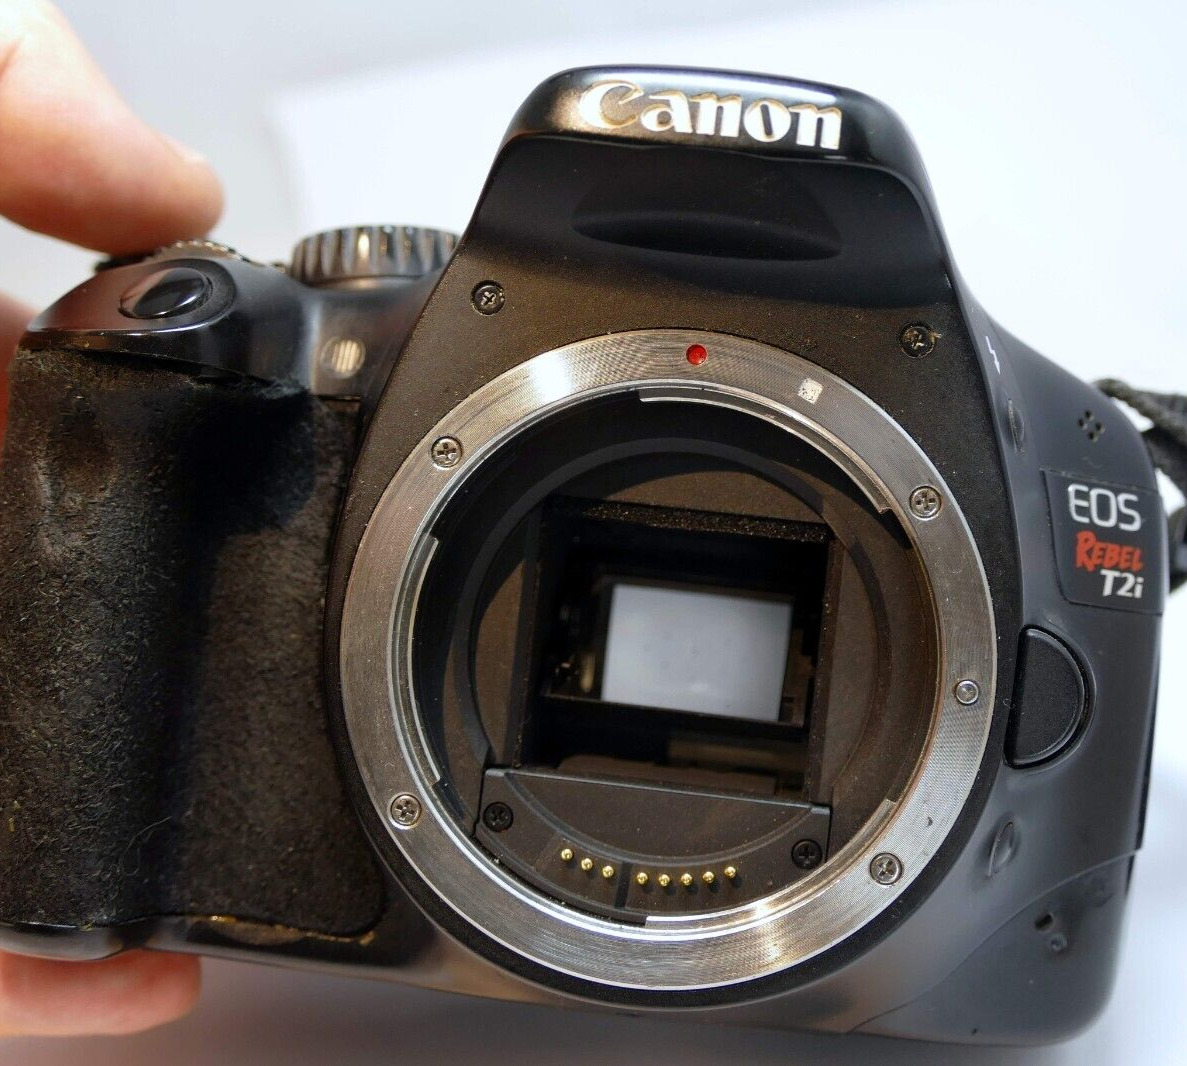 Canon EOS Rebel T2i 18 MP Digital SLR Camera - Black (Body Only) - tested, works